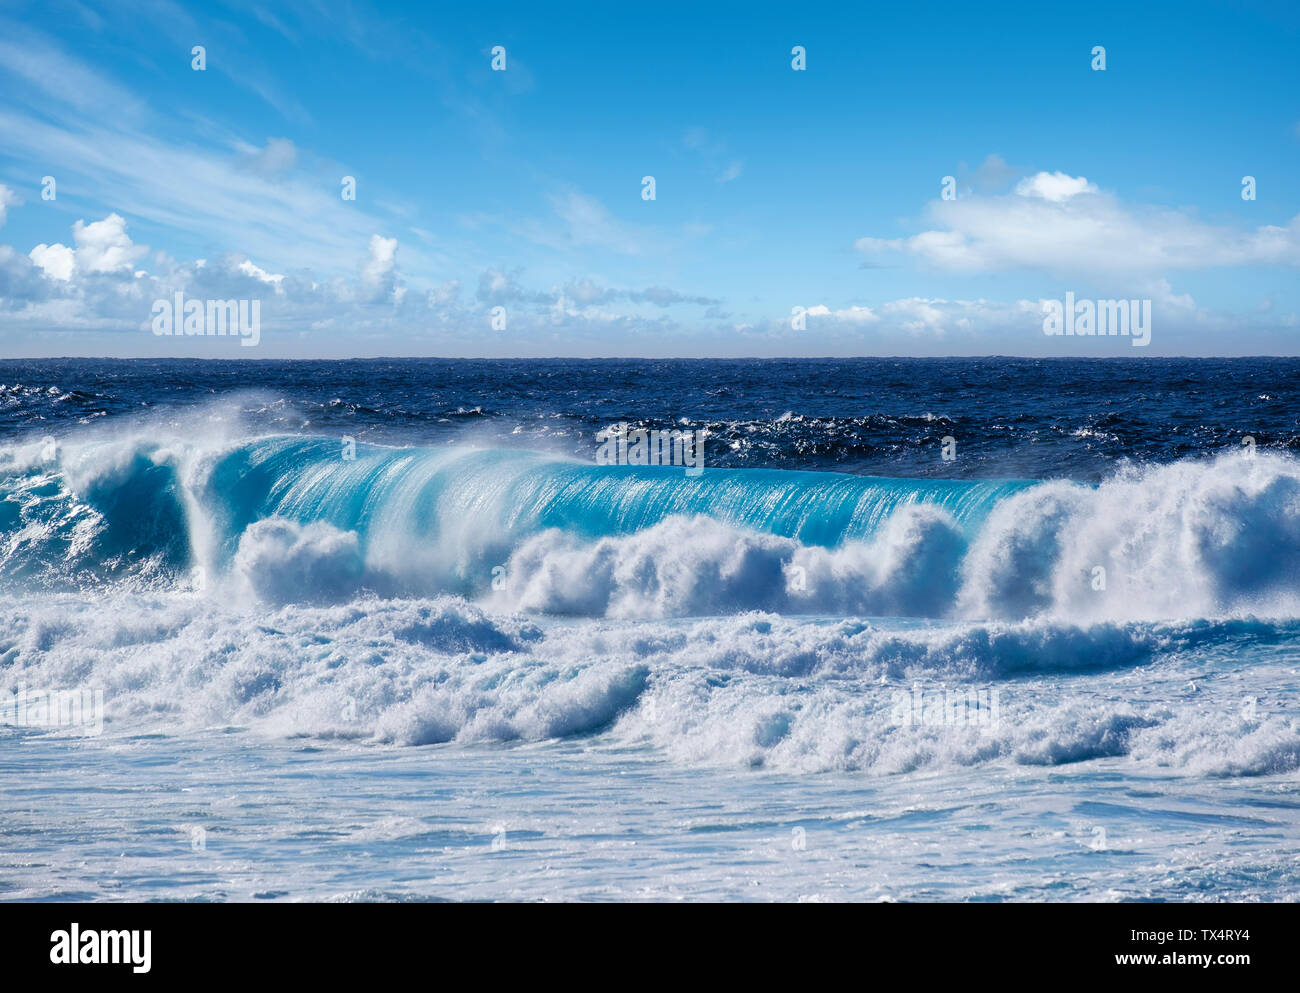 Spain, Canary Islands, Lanzarote, Tinajo, breaking wave Stock Photo